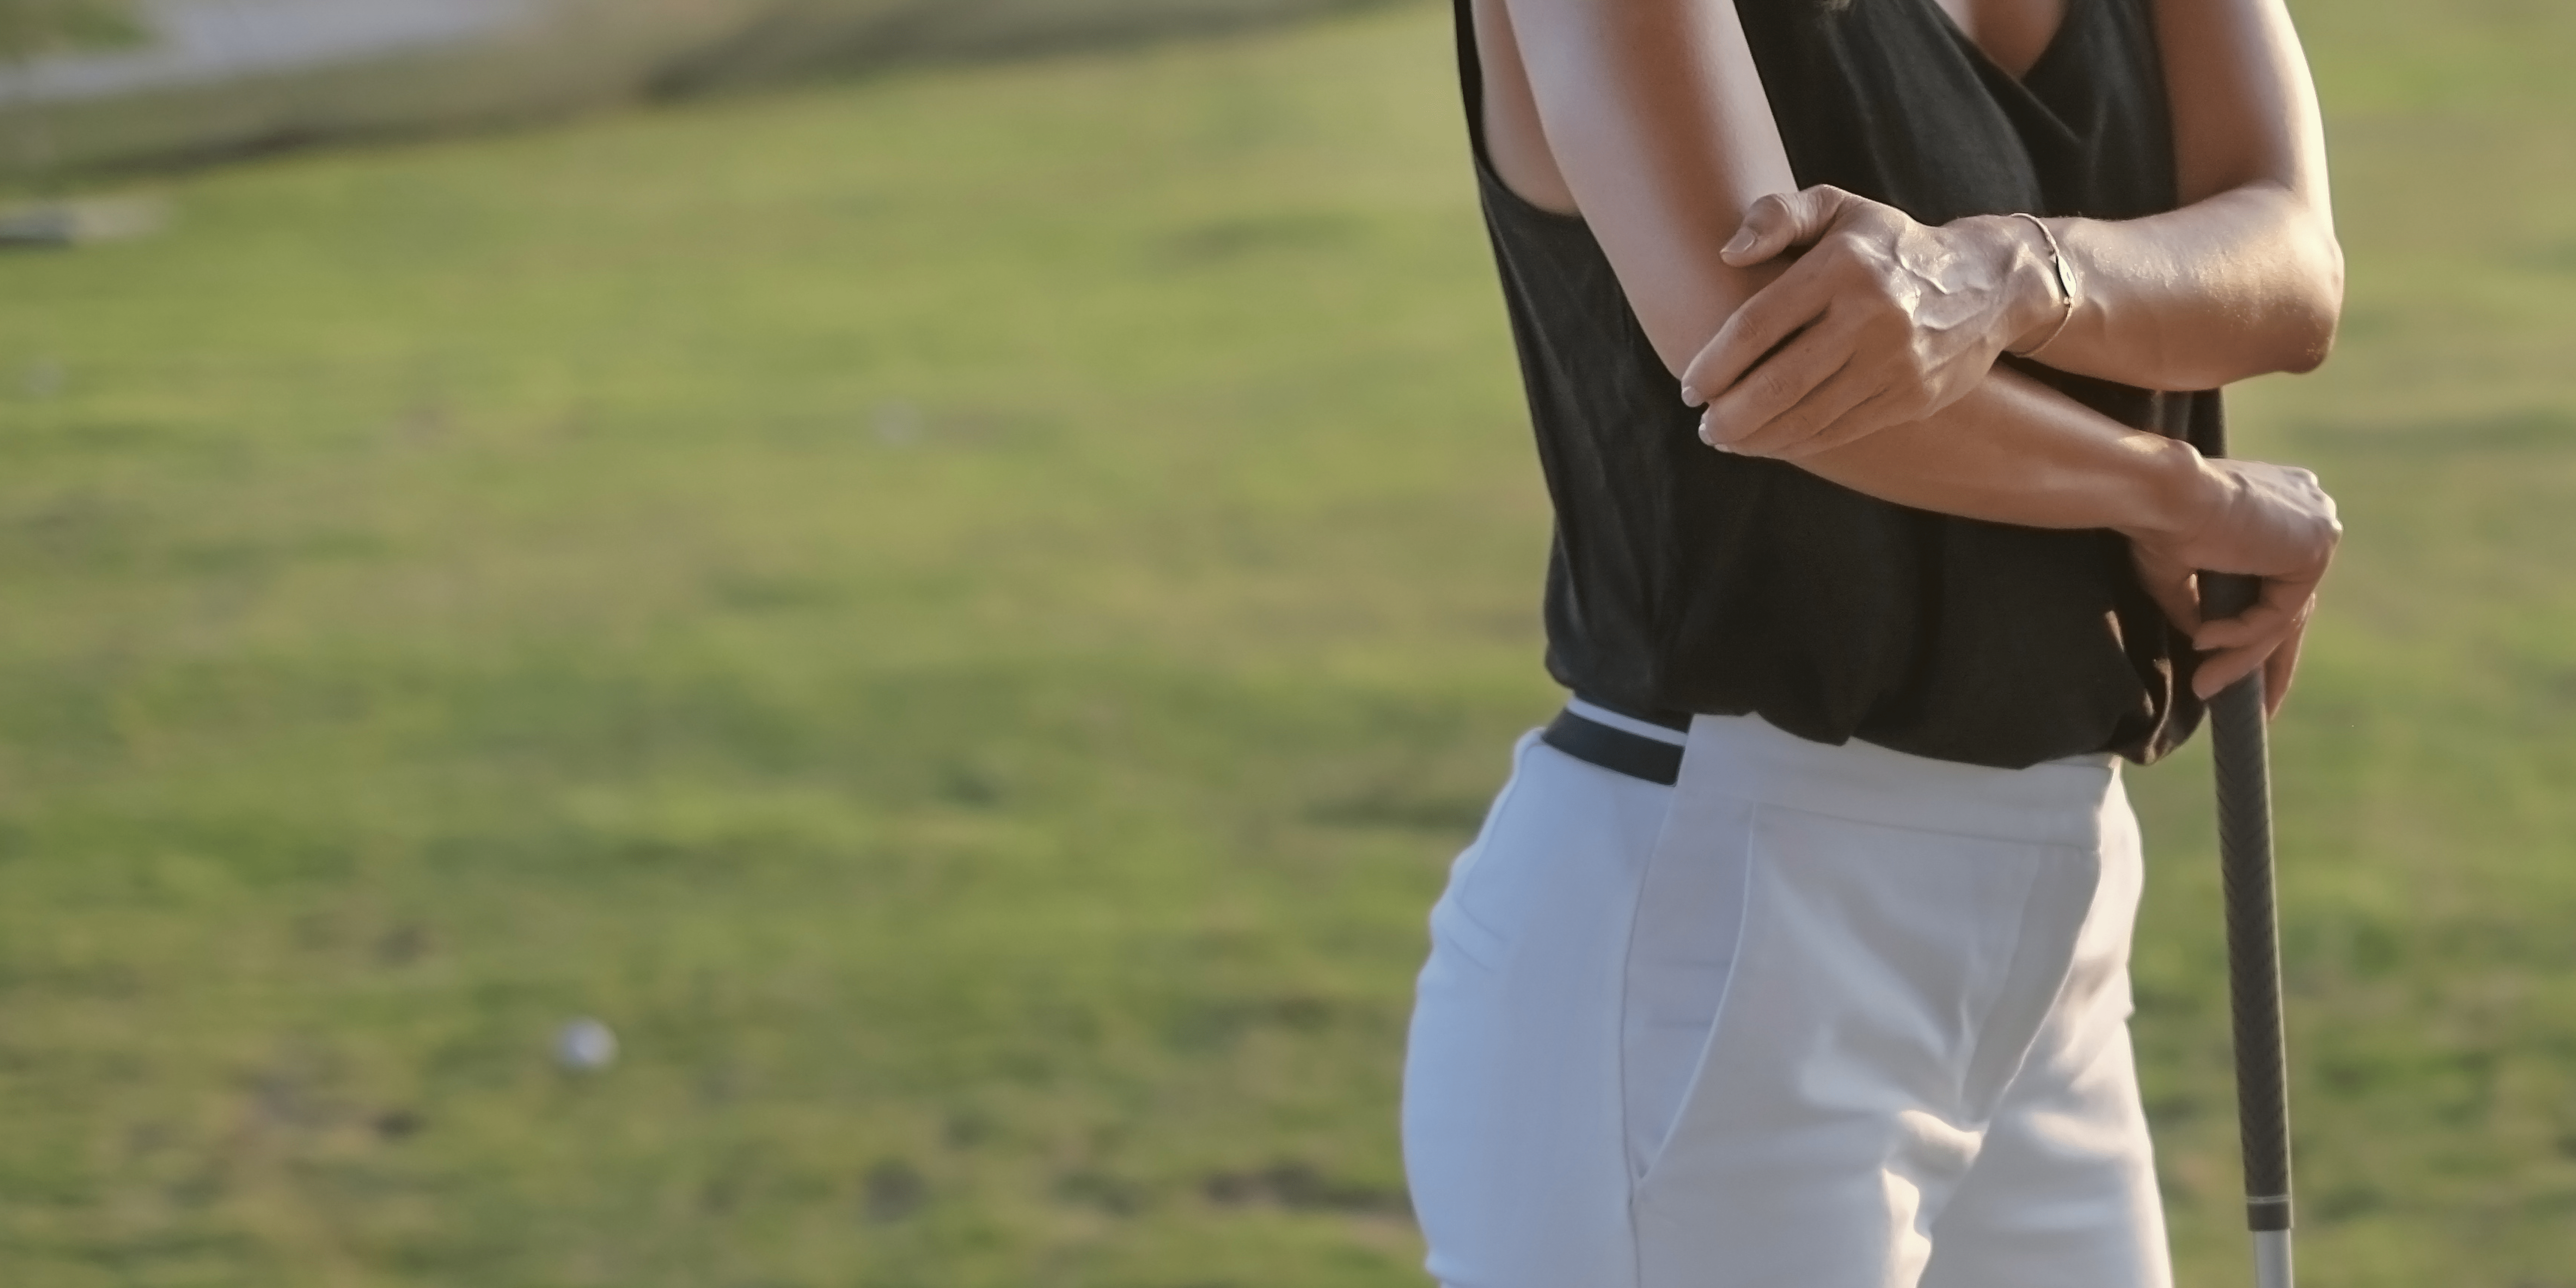 golfers elbow, Olecranon Bursa Excision